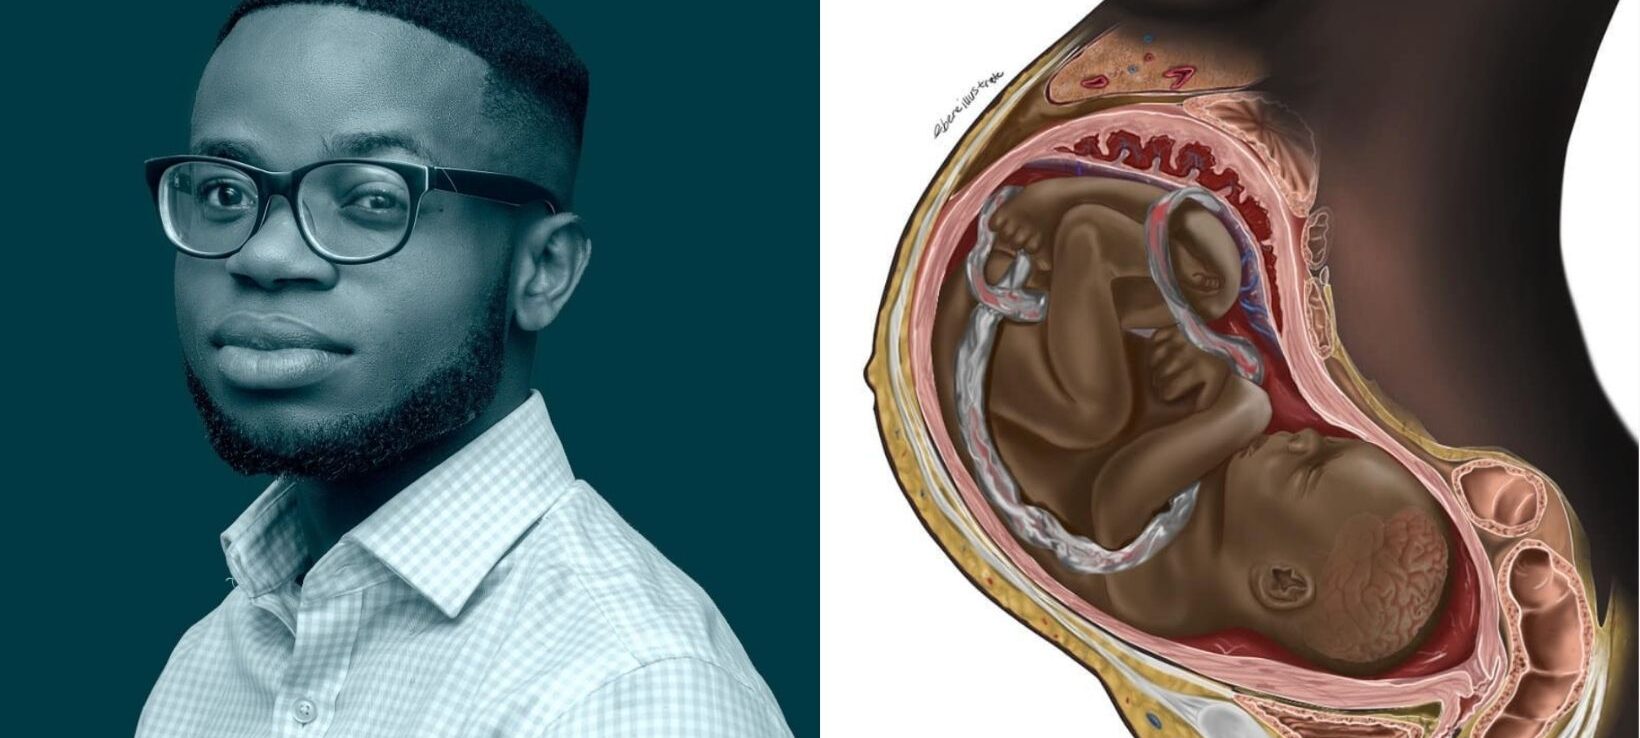 Rising Medical Student Illustrates Anatomy Images Featuring Black Bodies